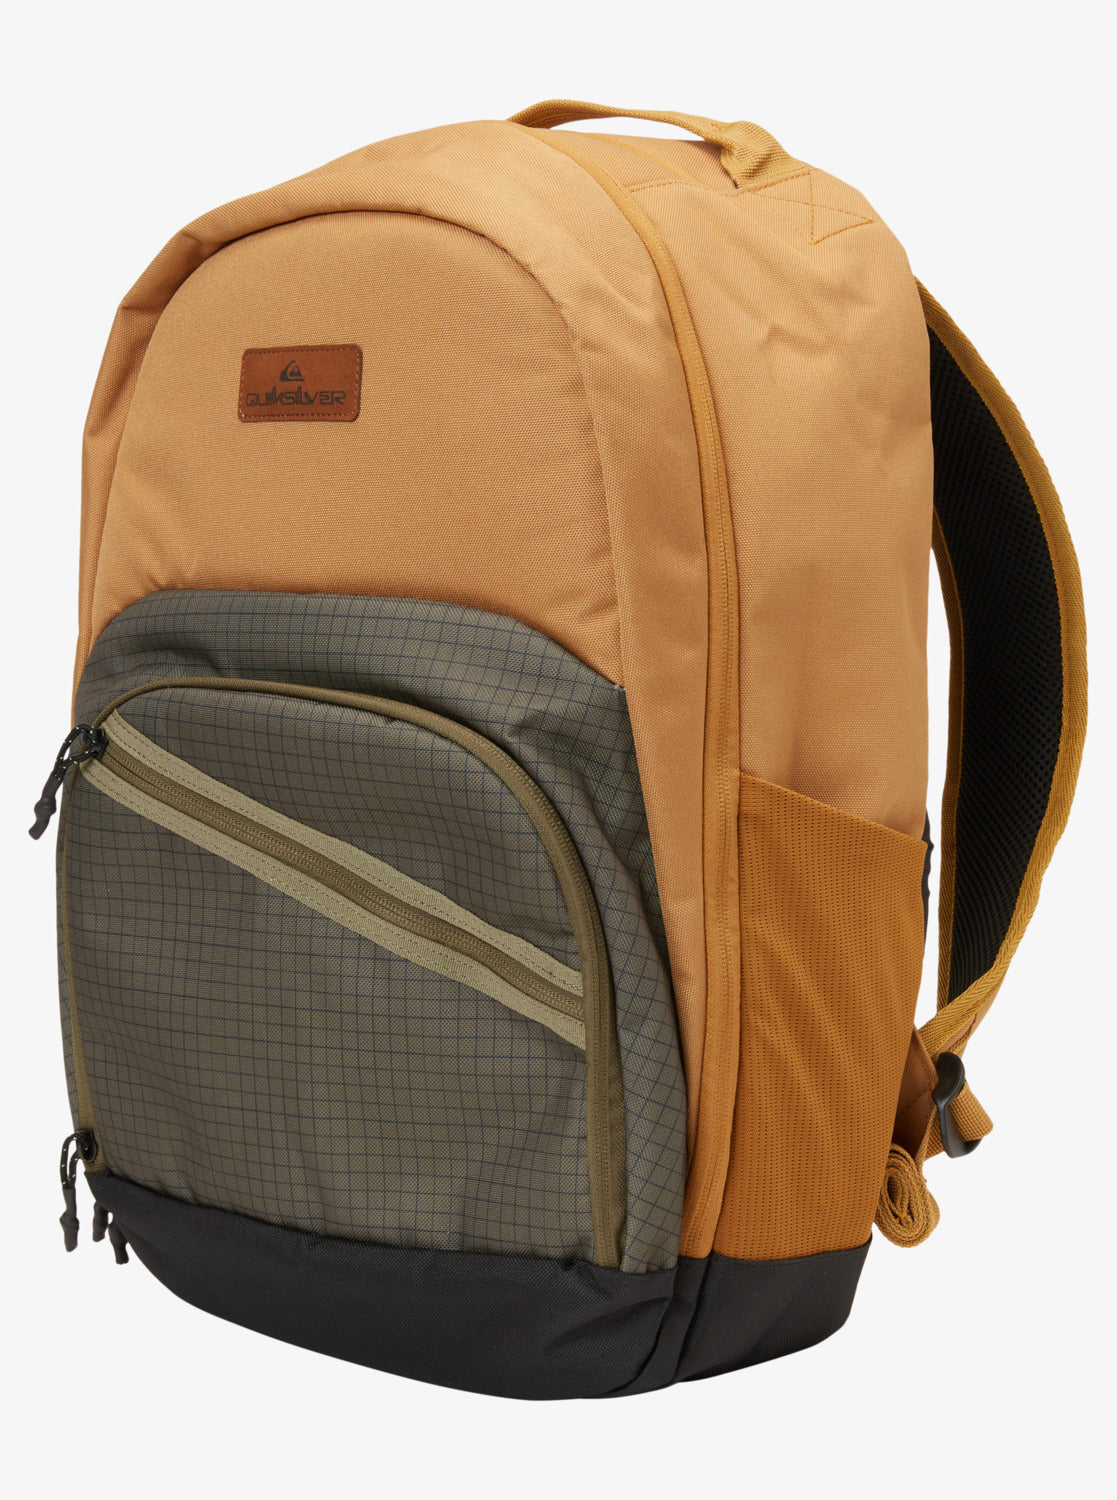 Quiksilver Schoolie Cooler 2.0 30L Backpack from side